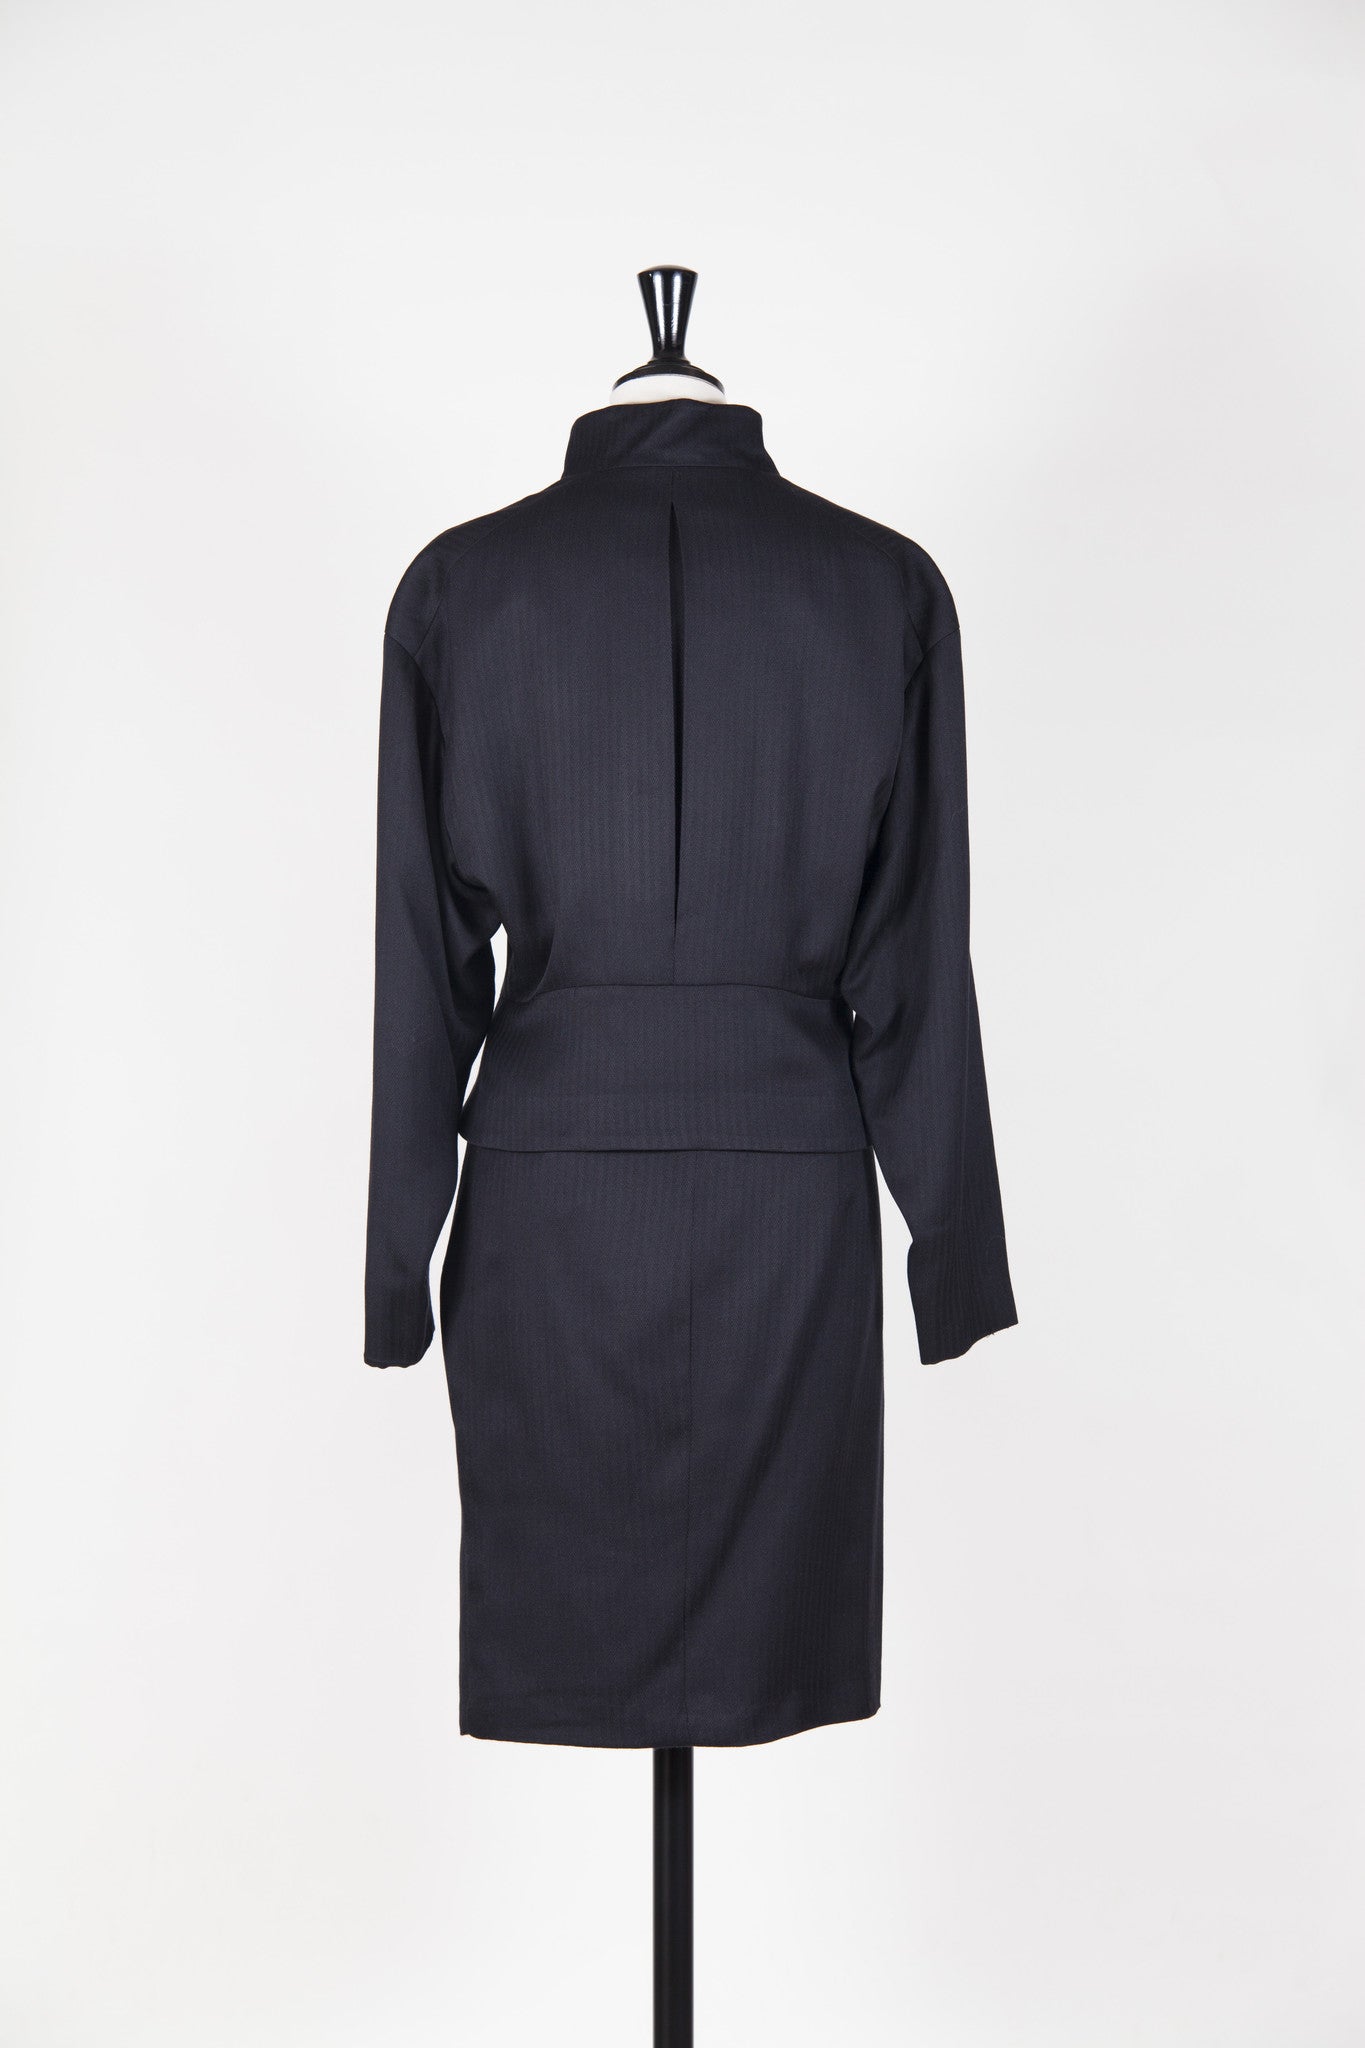 Isabella's Wardrobe Gianna Versace Couture Herringbone weave skirt suit.